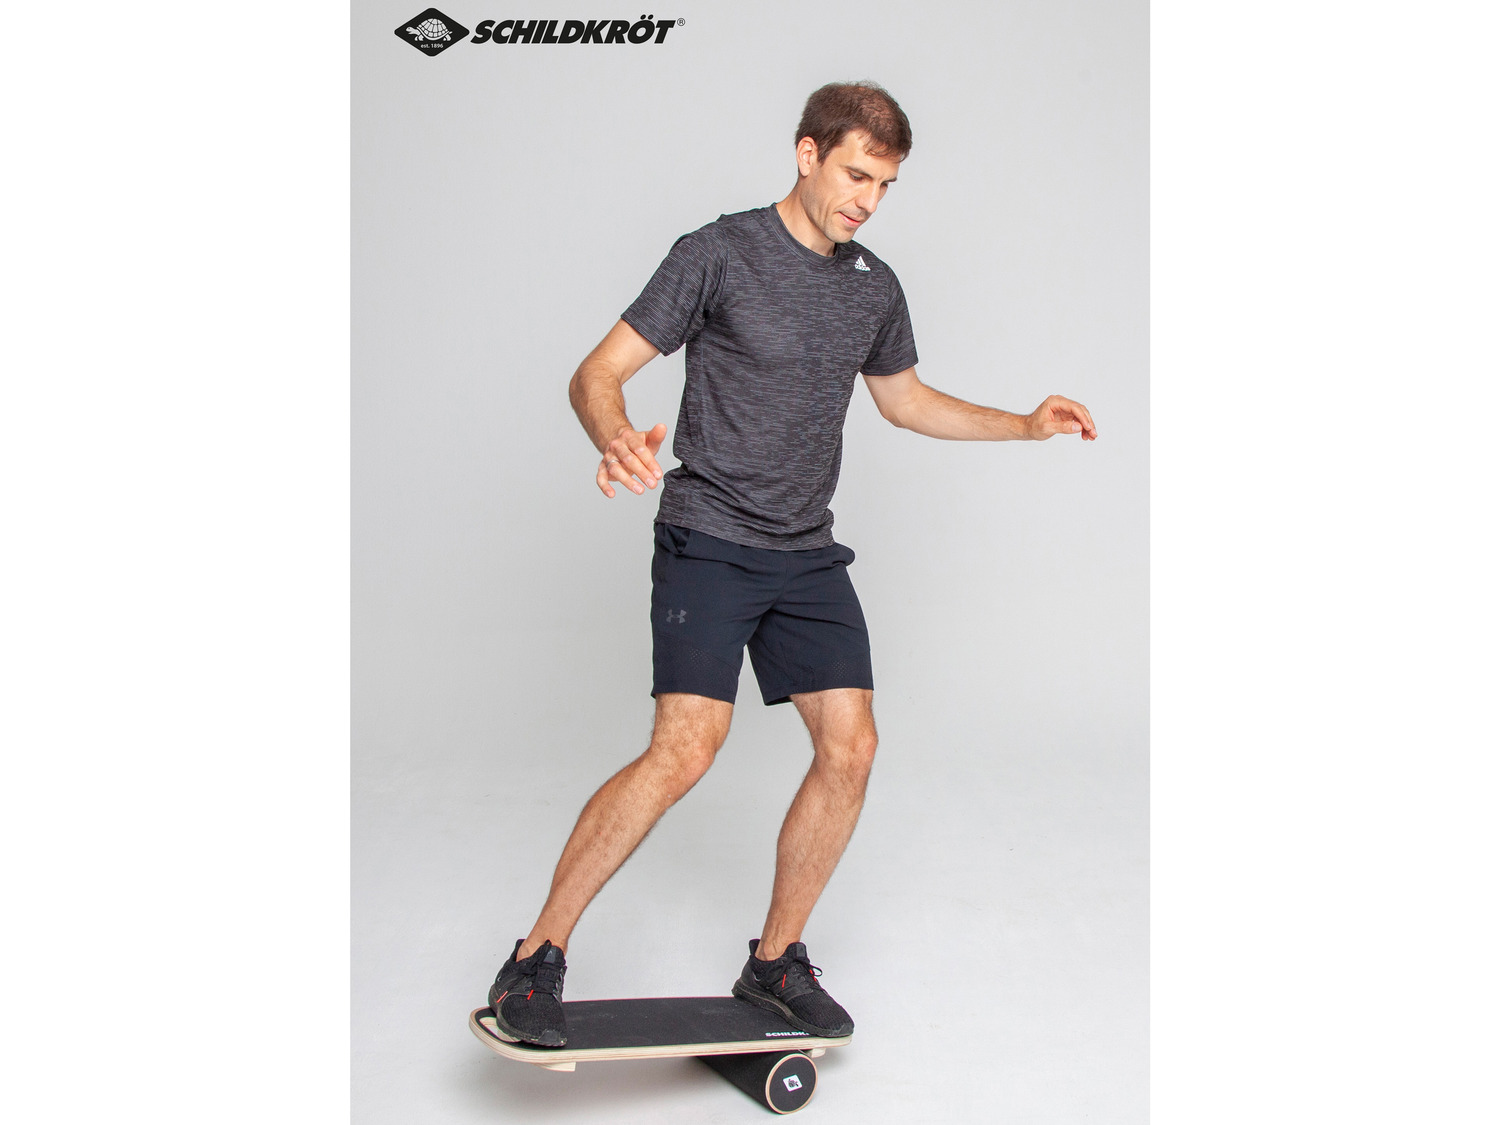 | Schildkröt Board Fitness Balance Wooden LIDL